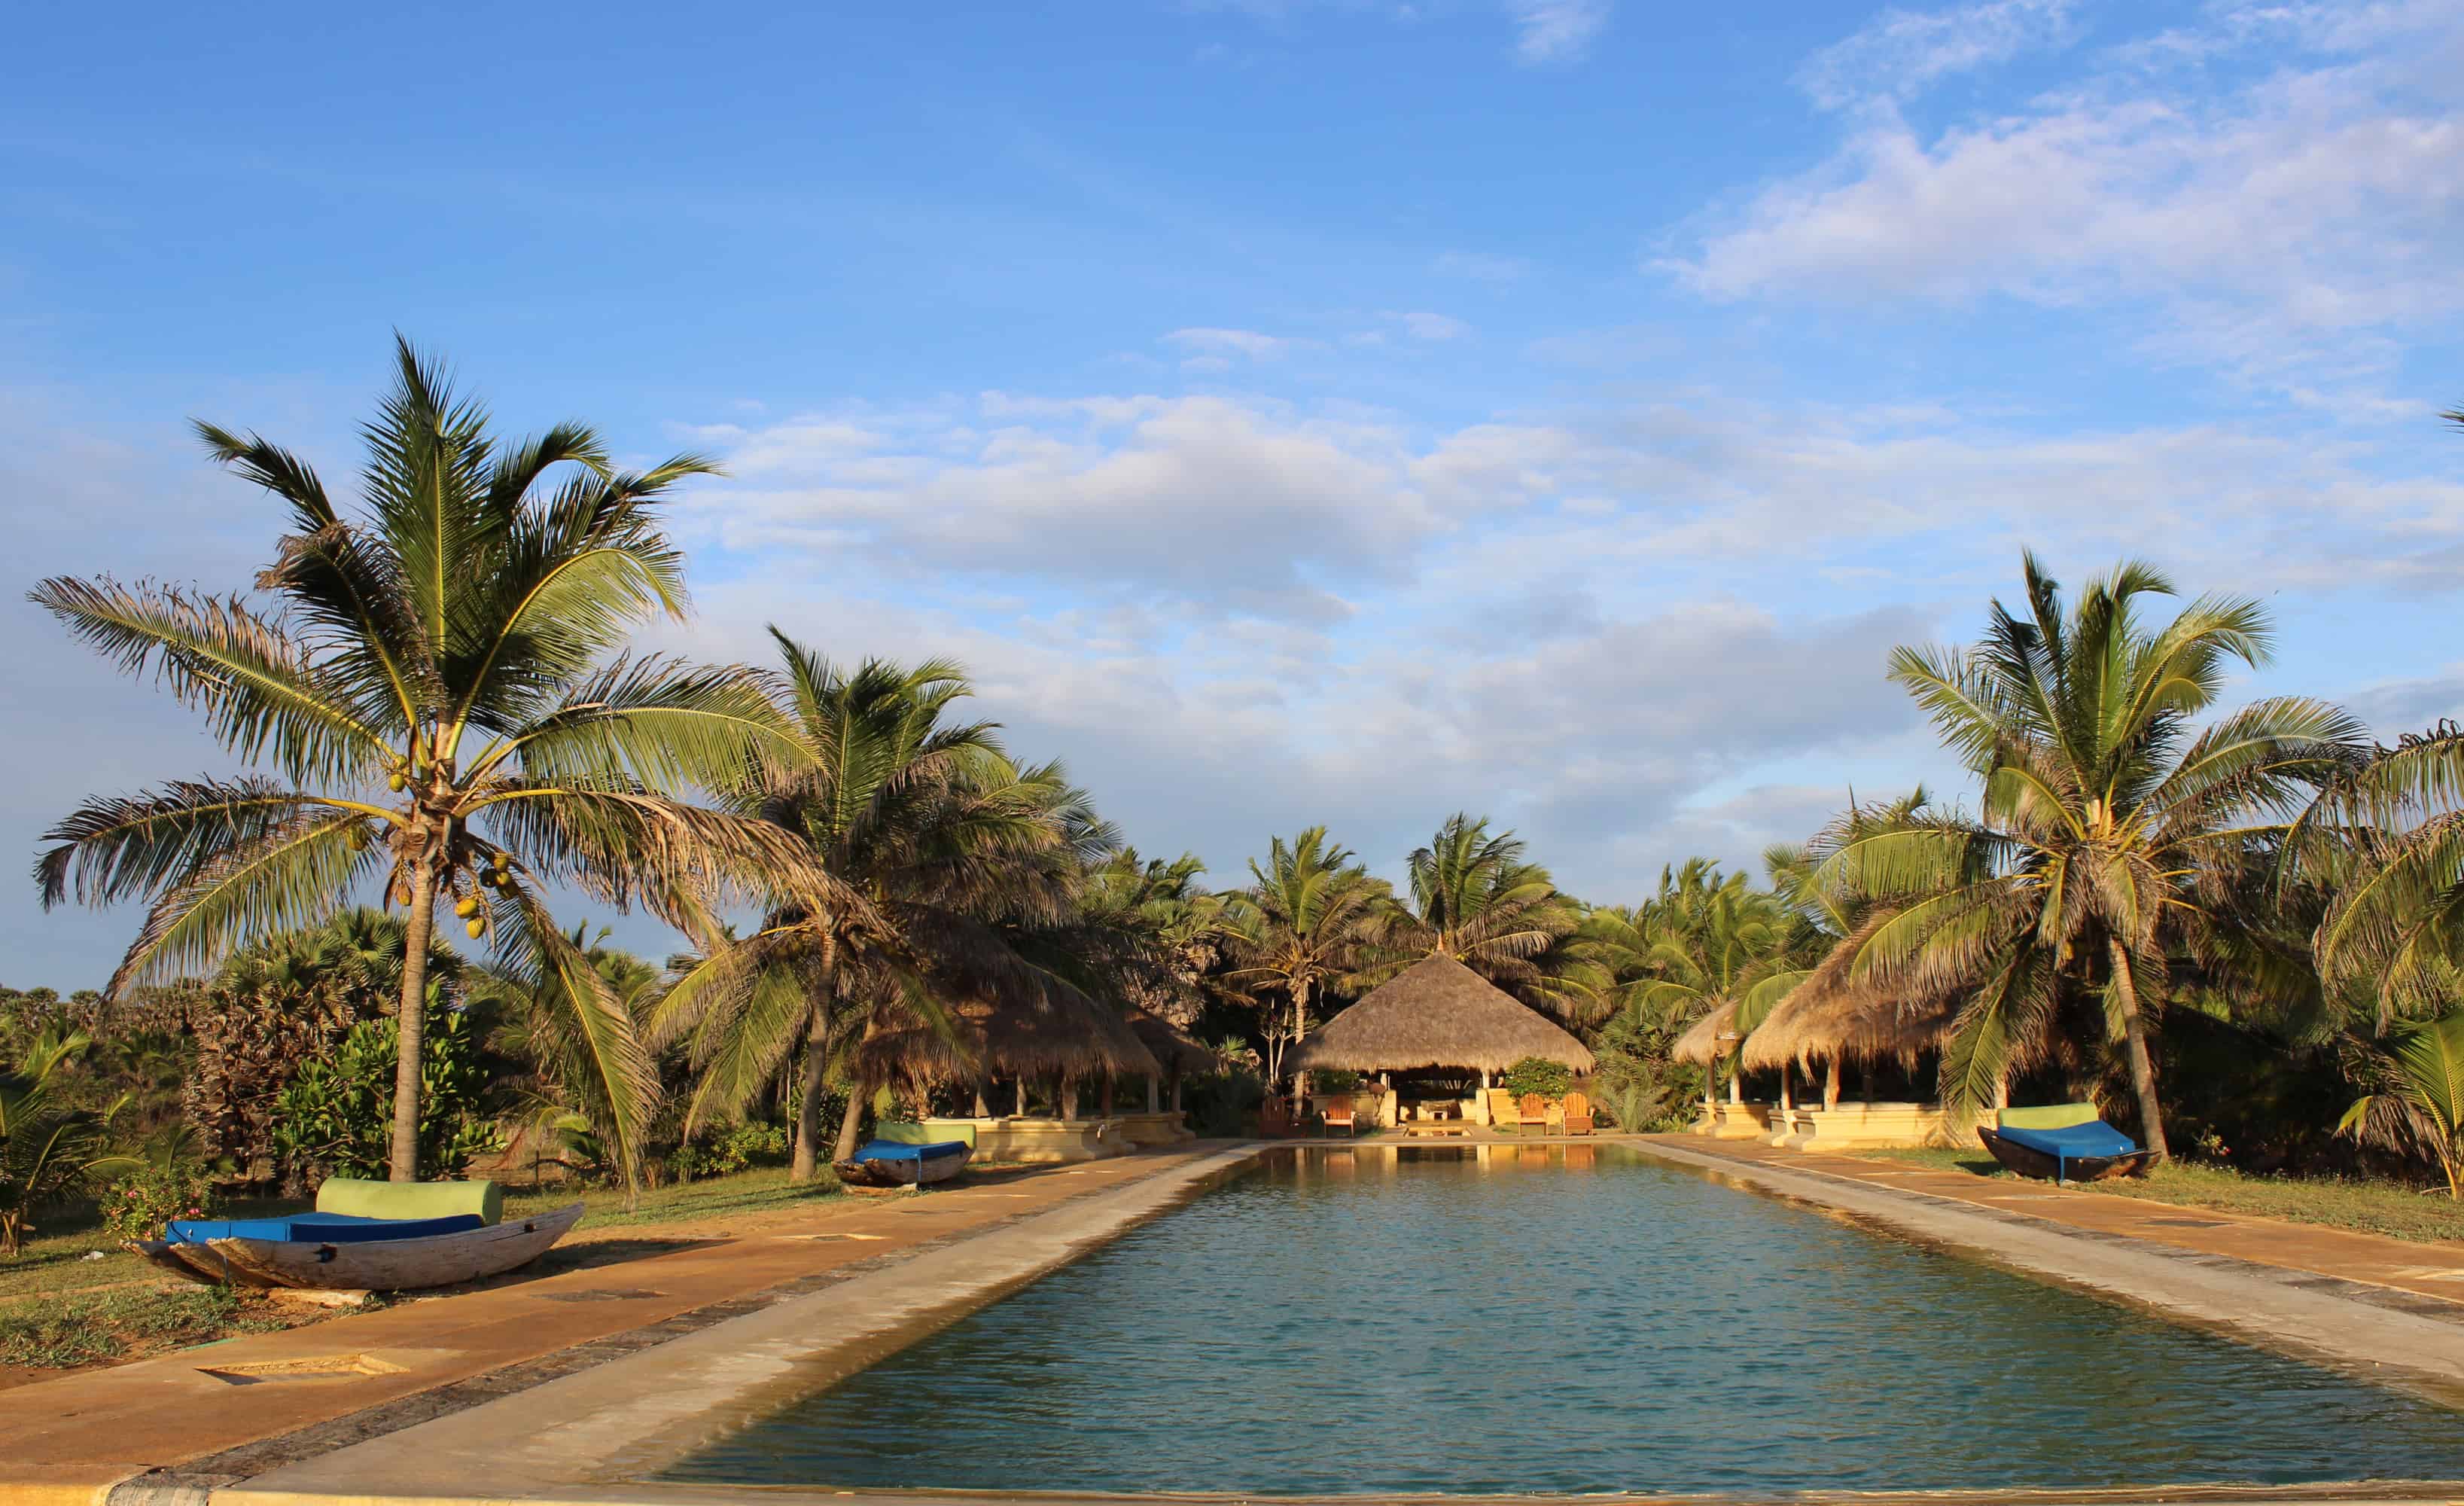 View of the pool at Bar Reef Hotel Kalpitiya west coast Sri Lanka